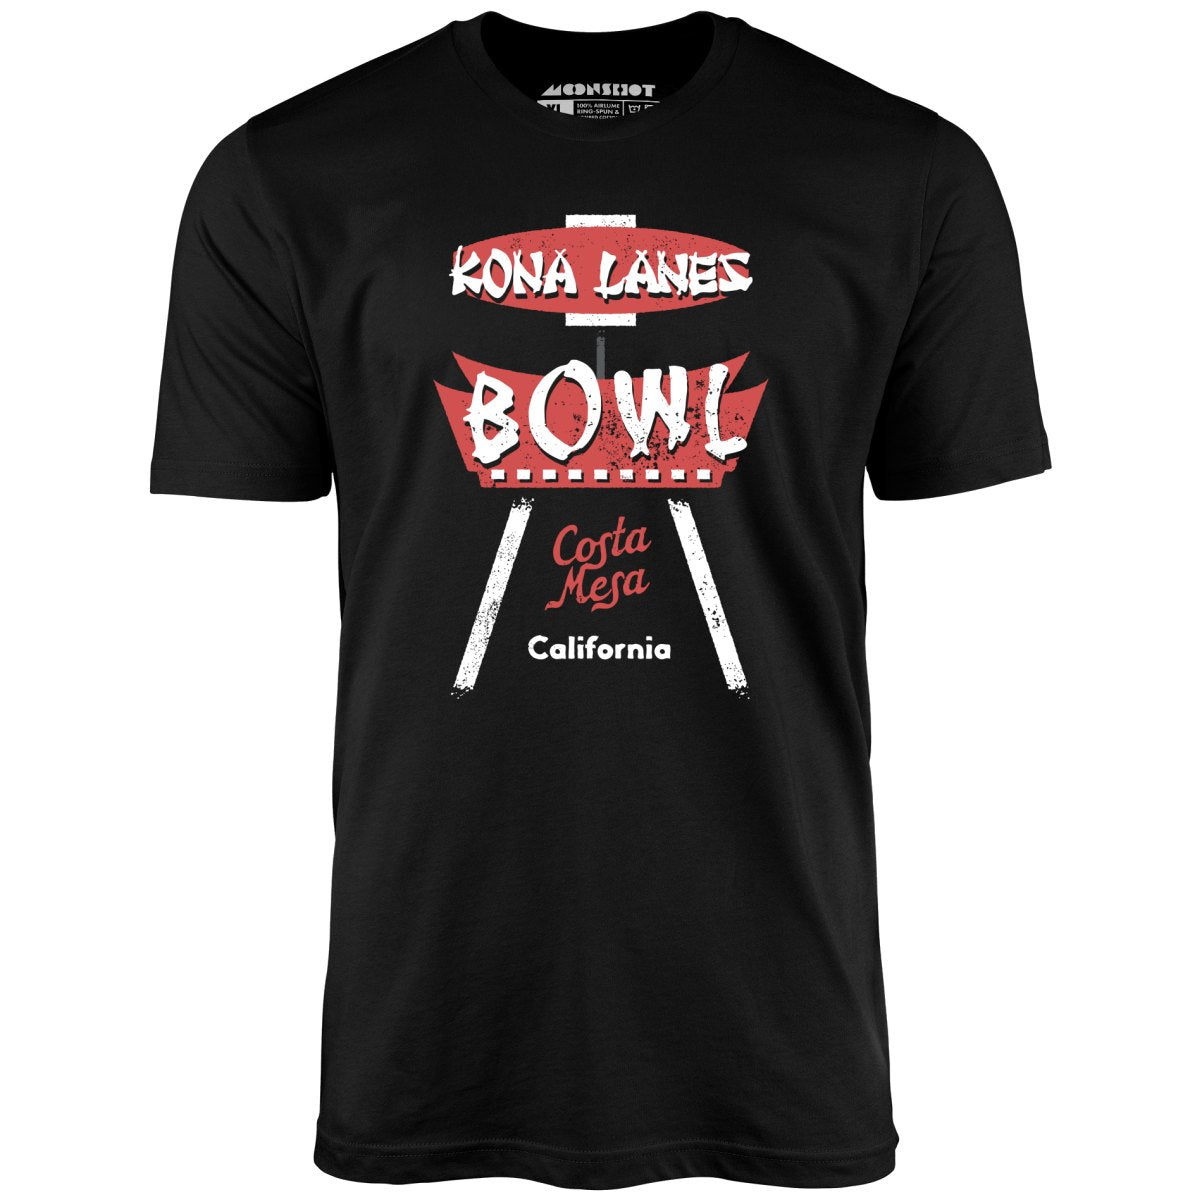 Kona Lanes - Costa Mesa, CA - Vintage Bowling Alley - Unisex T-Shirt